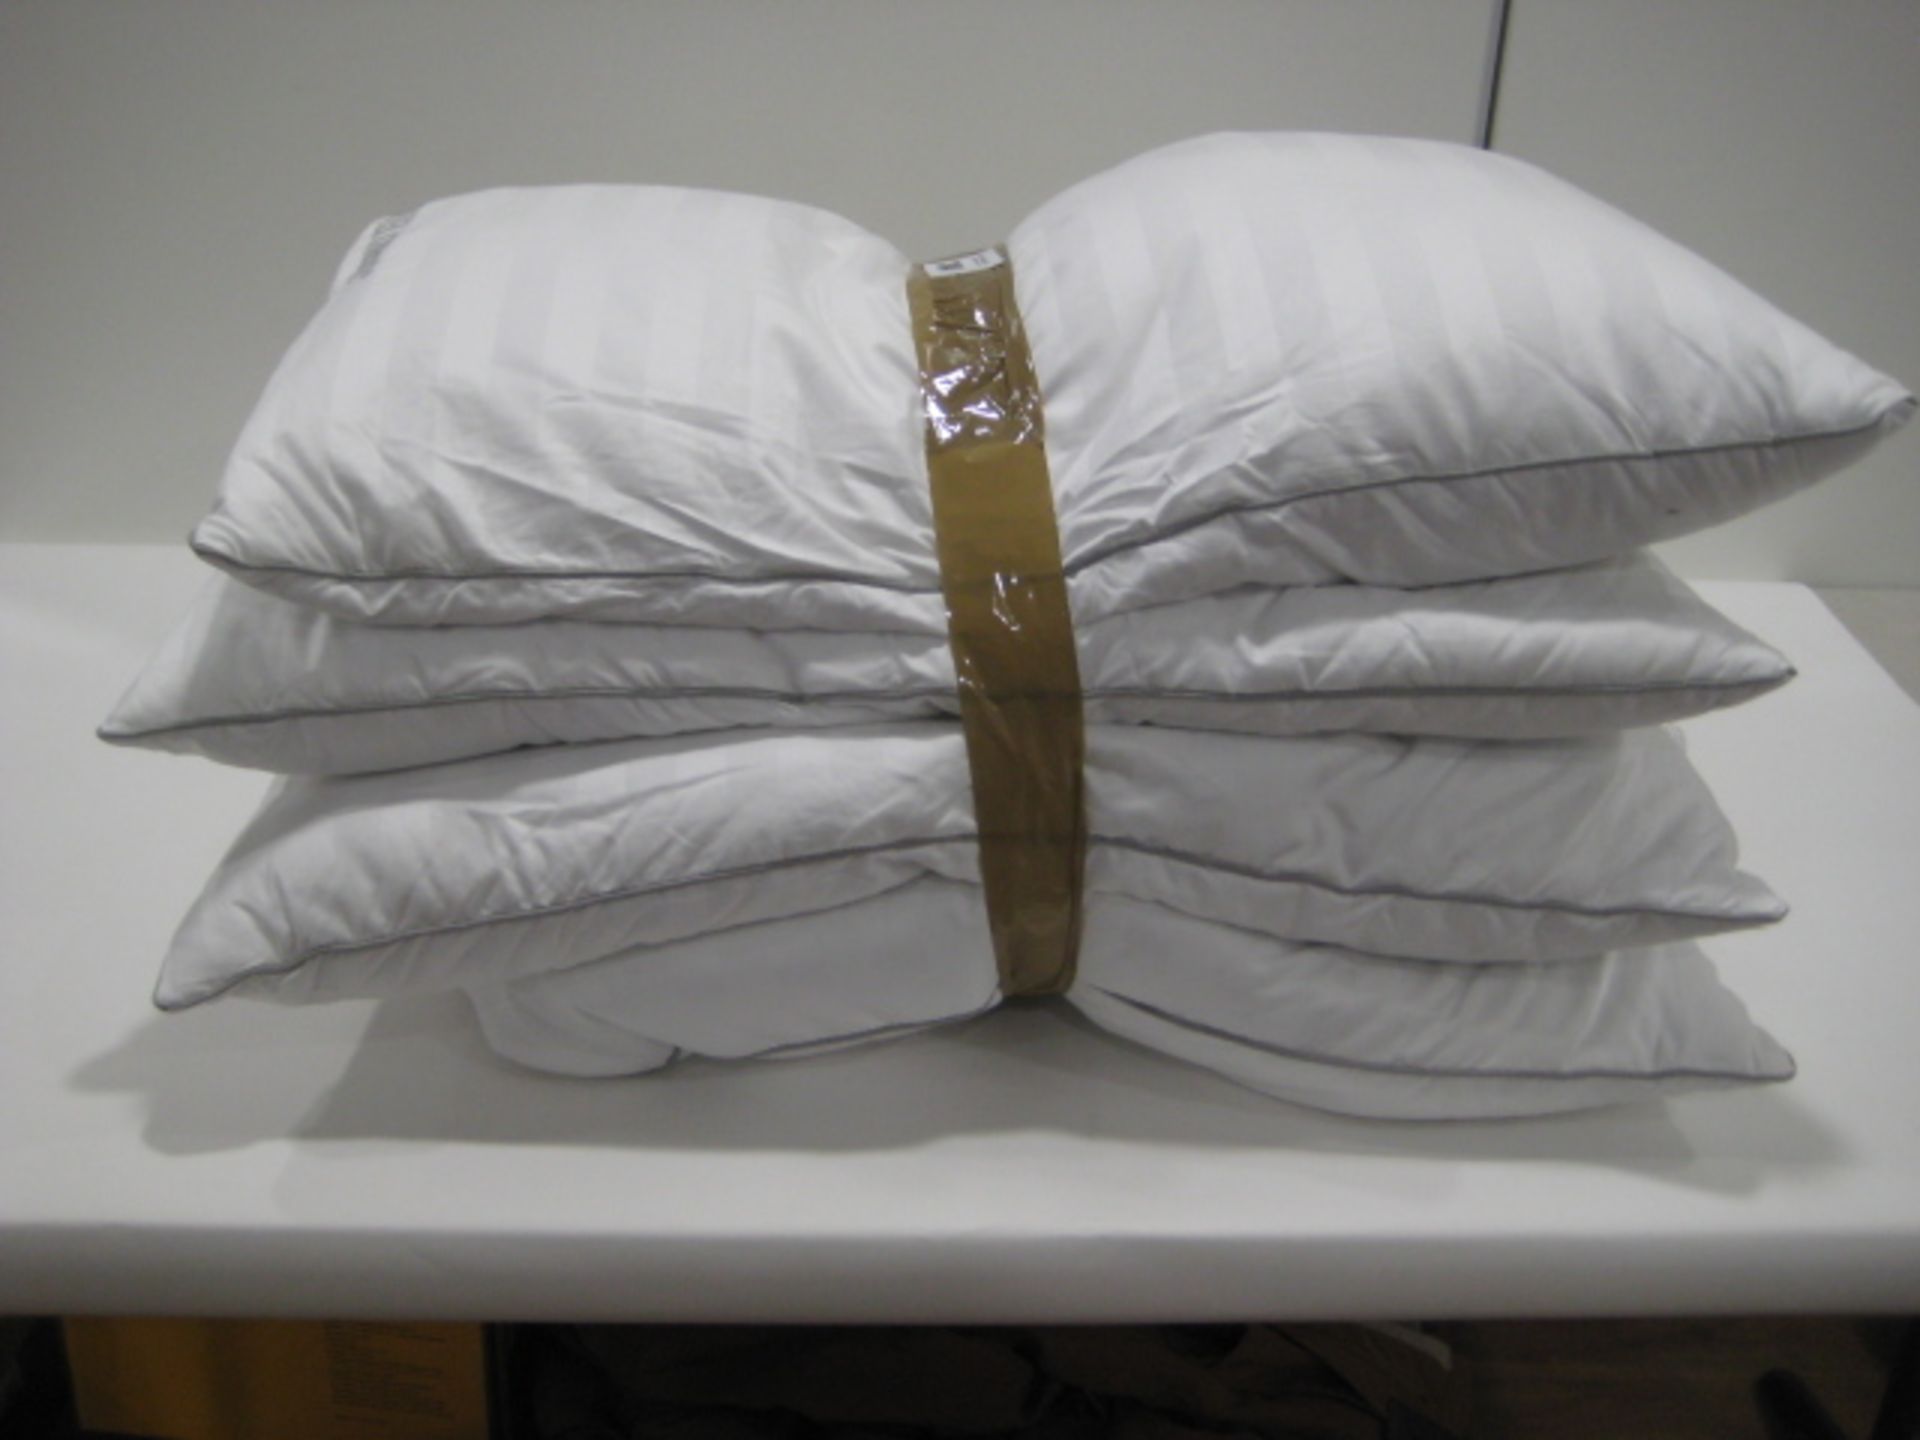 4 Hotel Grande pillows, unbagged